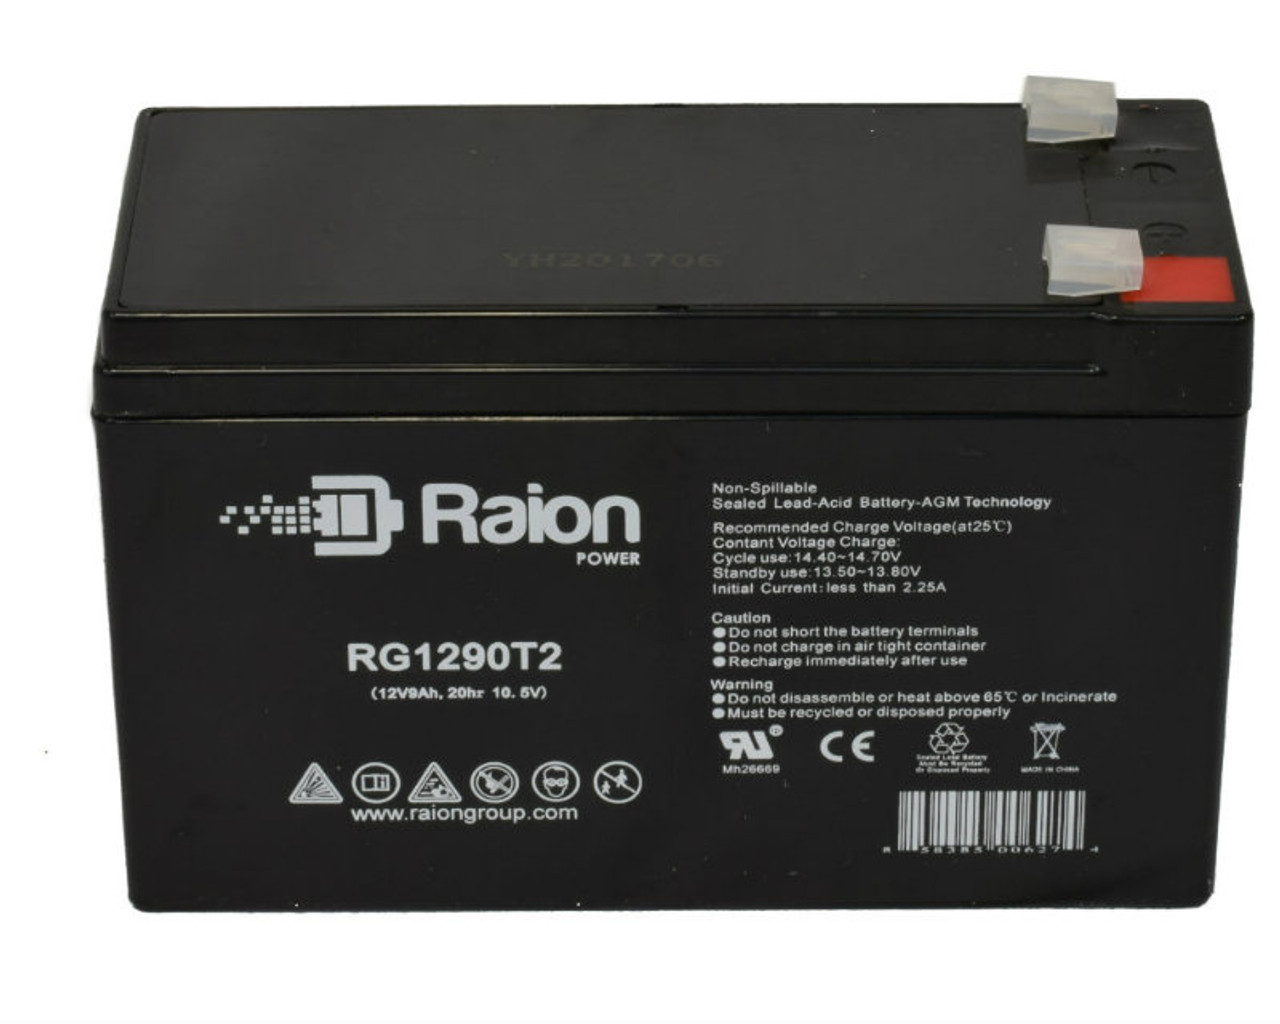 Raion Power RG1290T2 12V 9Ah Lead Acid Battery for City Mantis Scooter